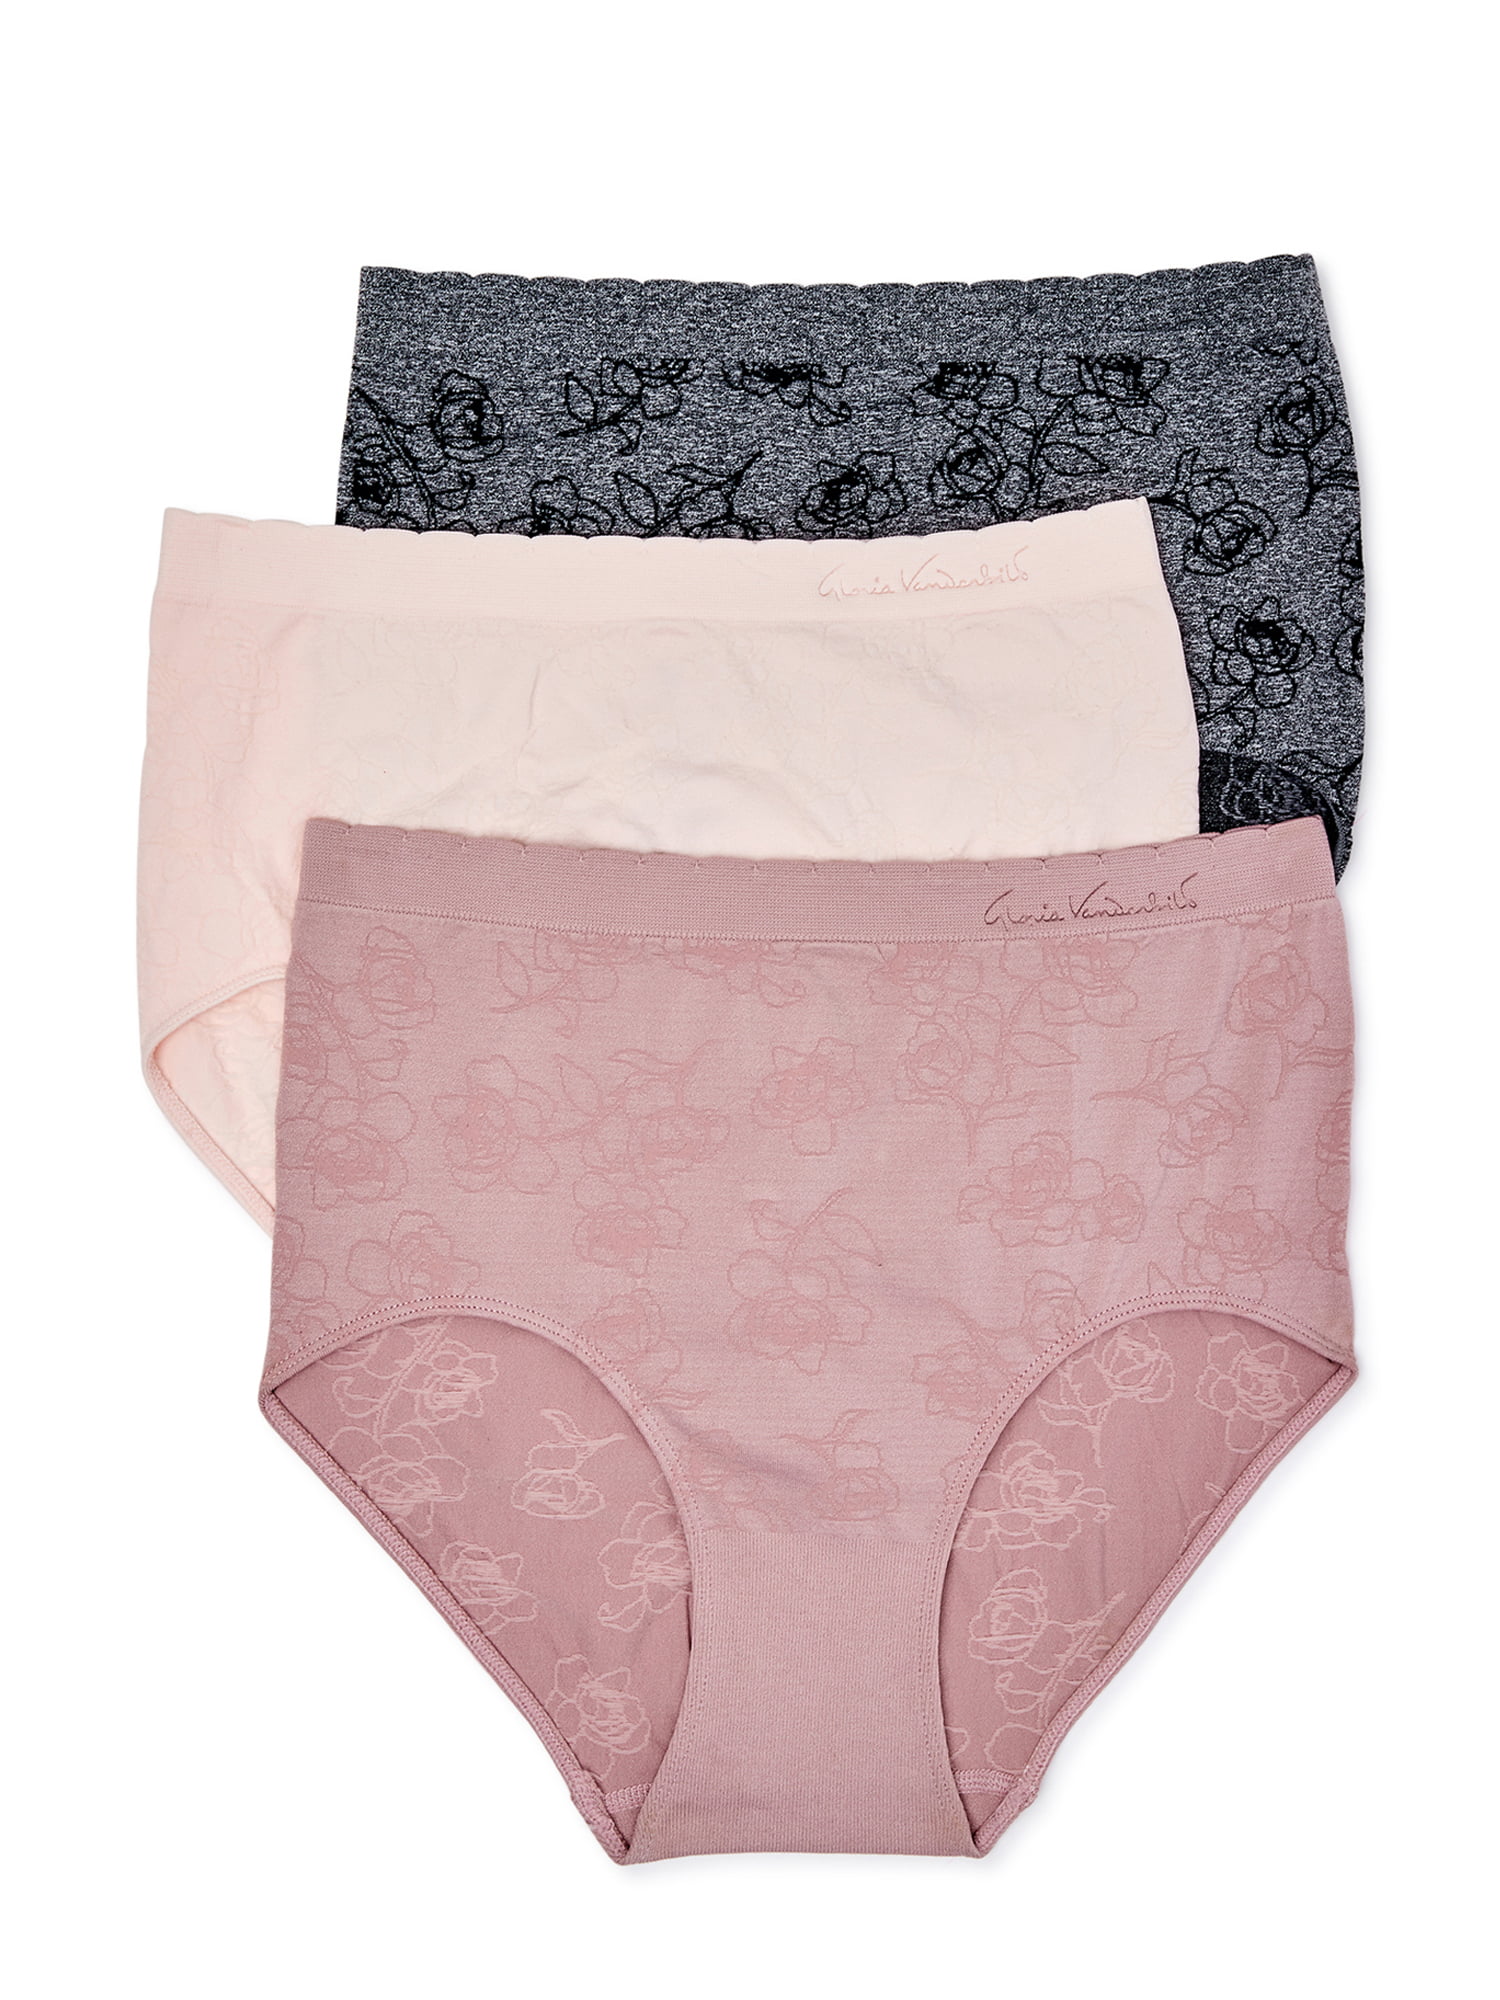 Gloria Vanderbilt Womens Underwear Panties Microfiber Invisible Edge Pack of 3 